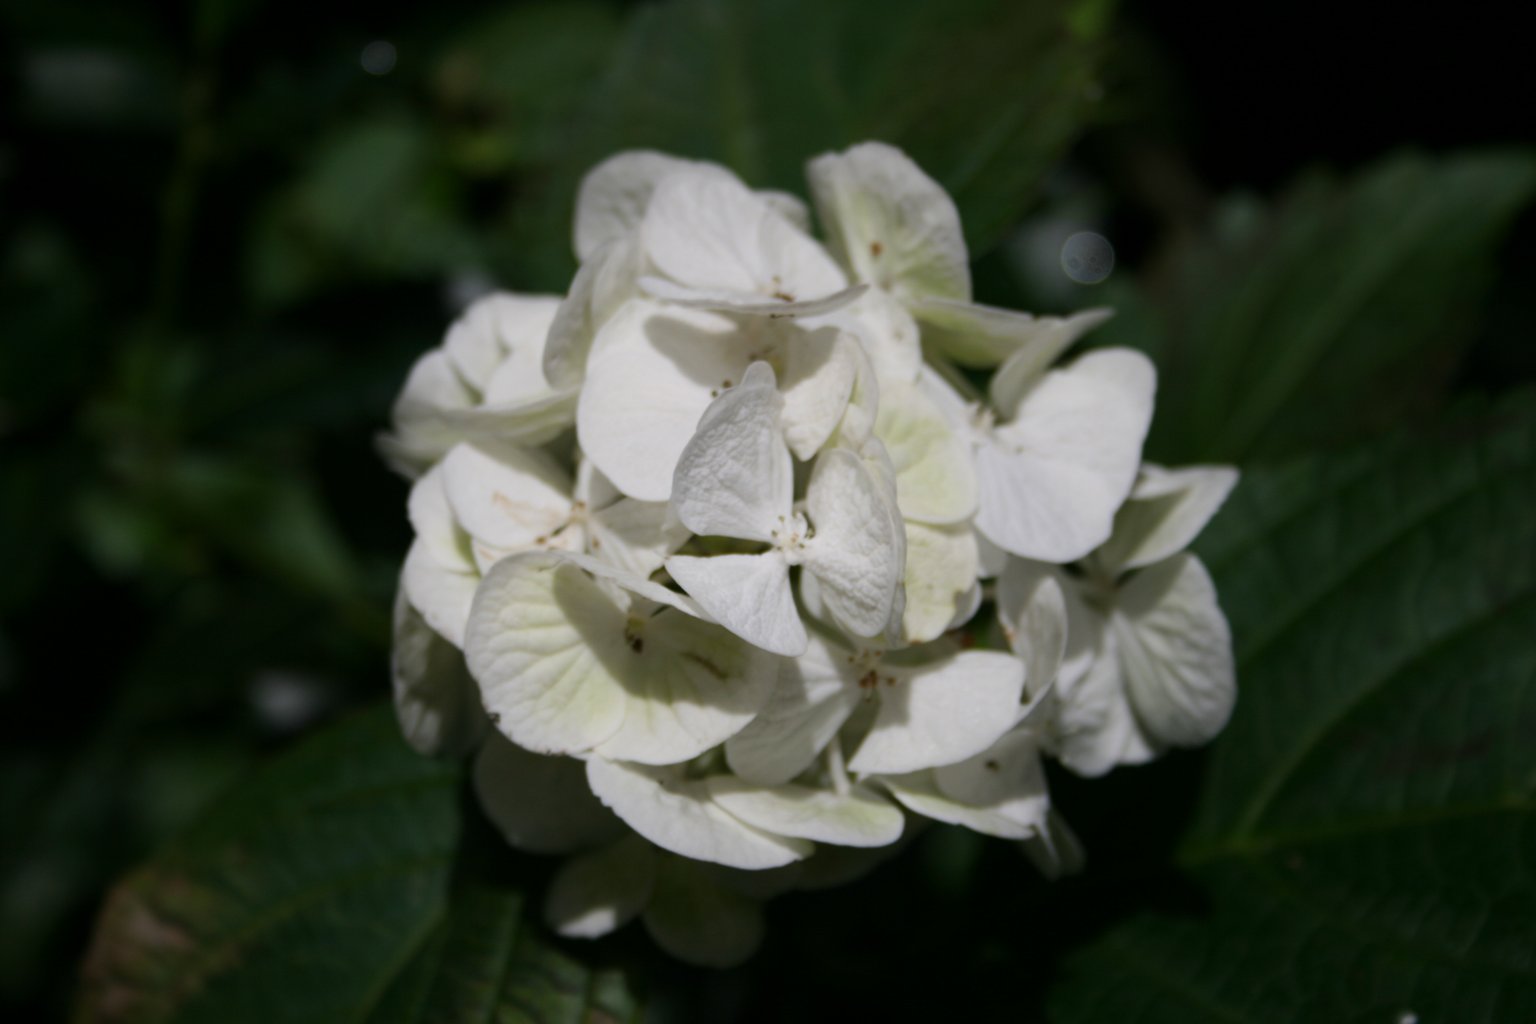 Hortensja ogrodowa "Snowball" / Hydrangea macrophylla "Snowball"